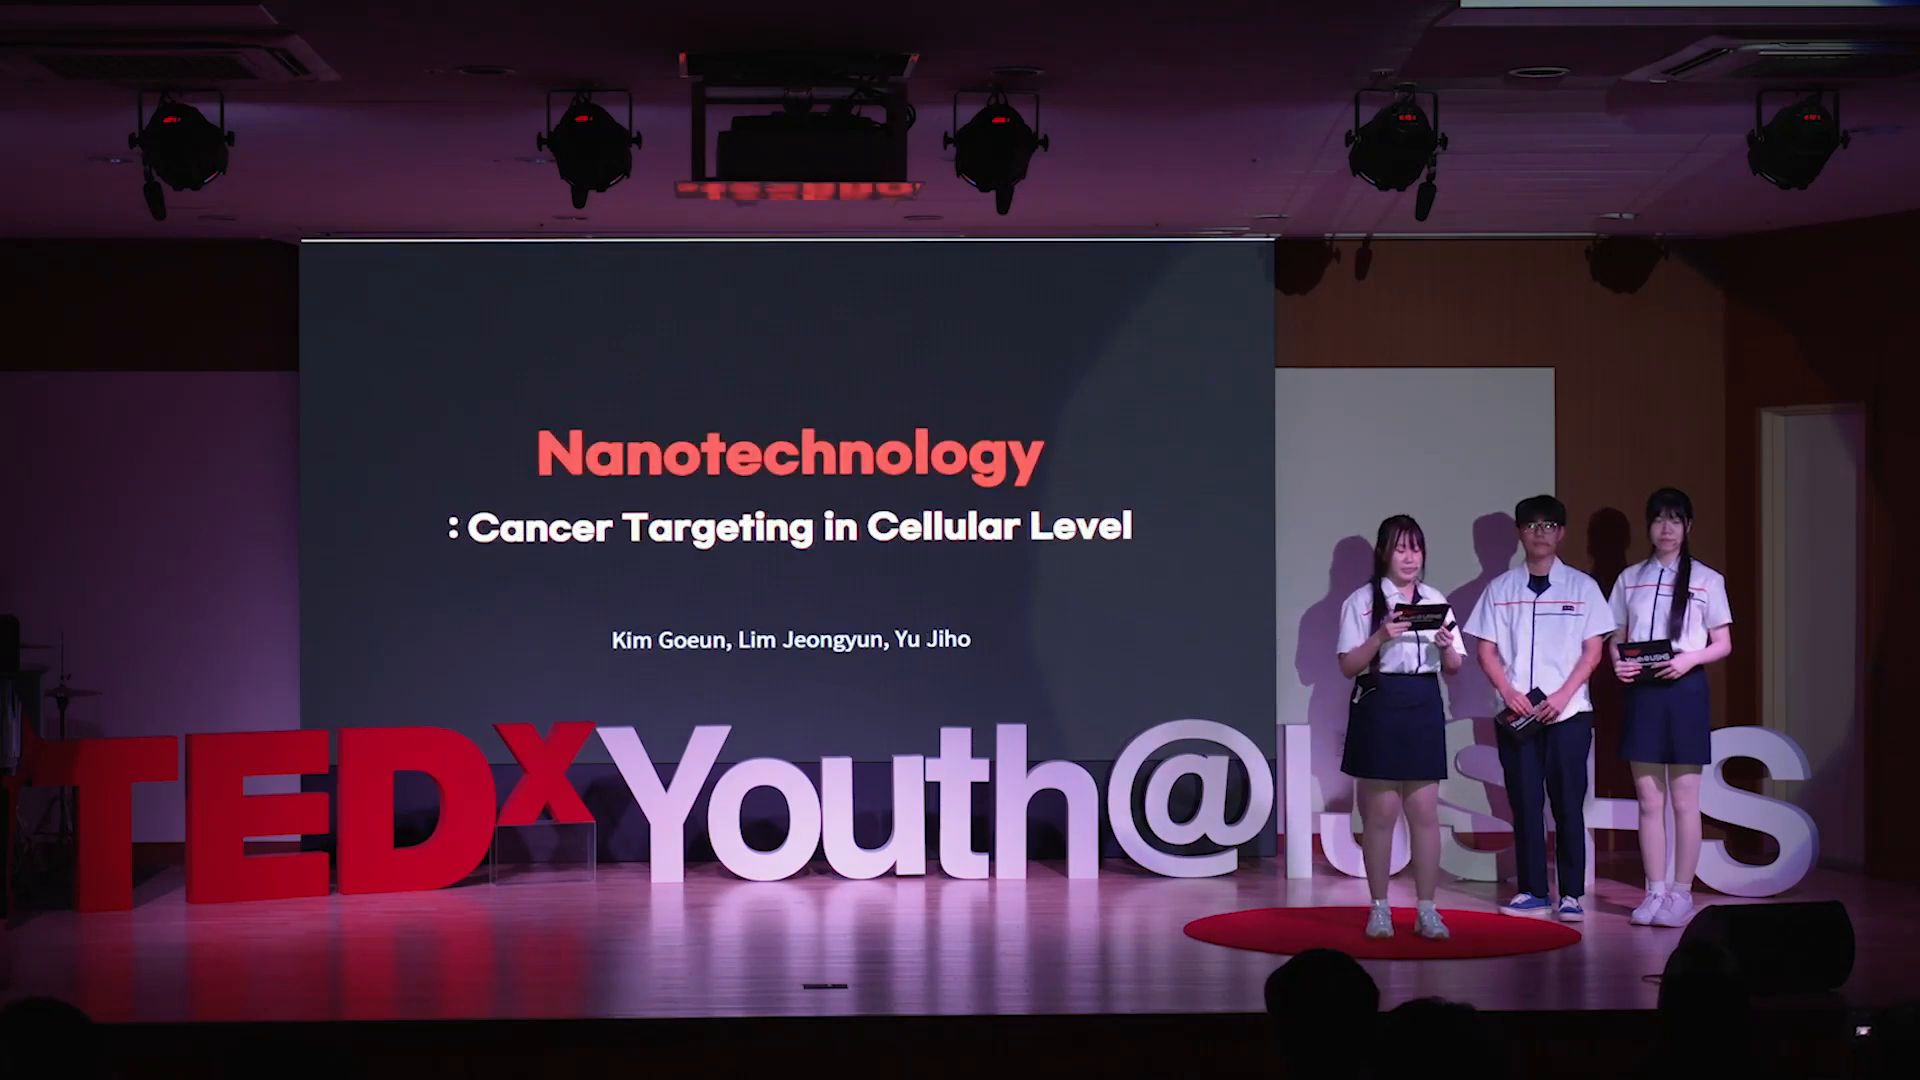 TEDxYouth@IJSHS : Nanotechnology Targeting for Cancer _ Goeun Kim, Jeongyun Lim, Jiho Yu